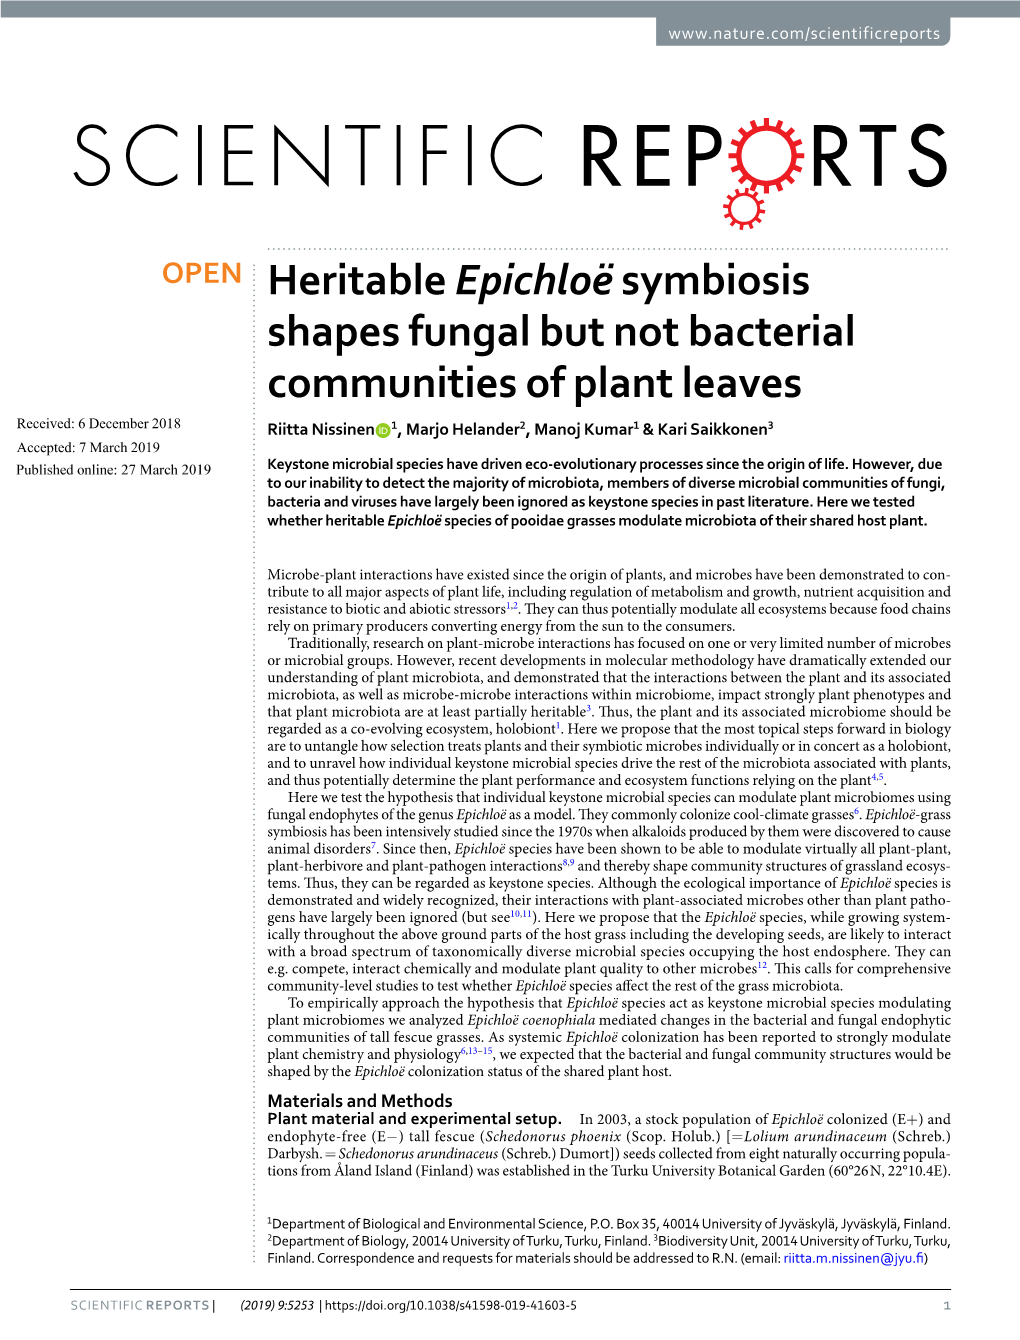 Heritable Epichloë Symbiosis Shapes Fungal but Not Bacterial